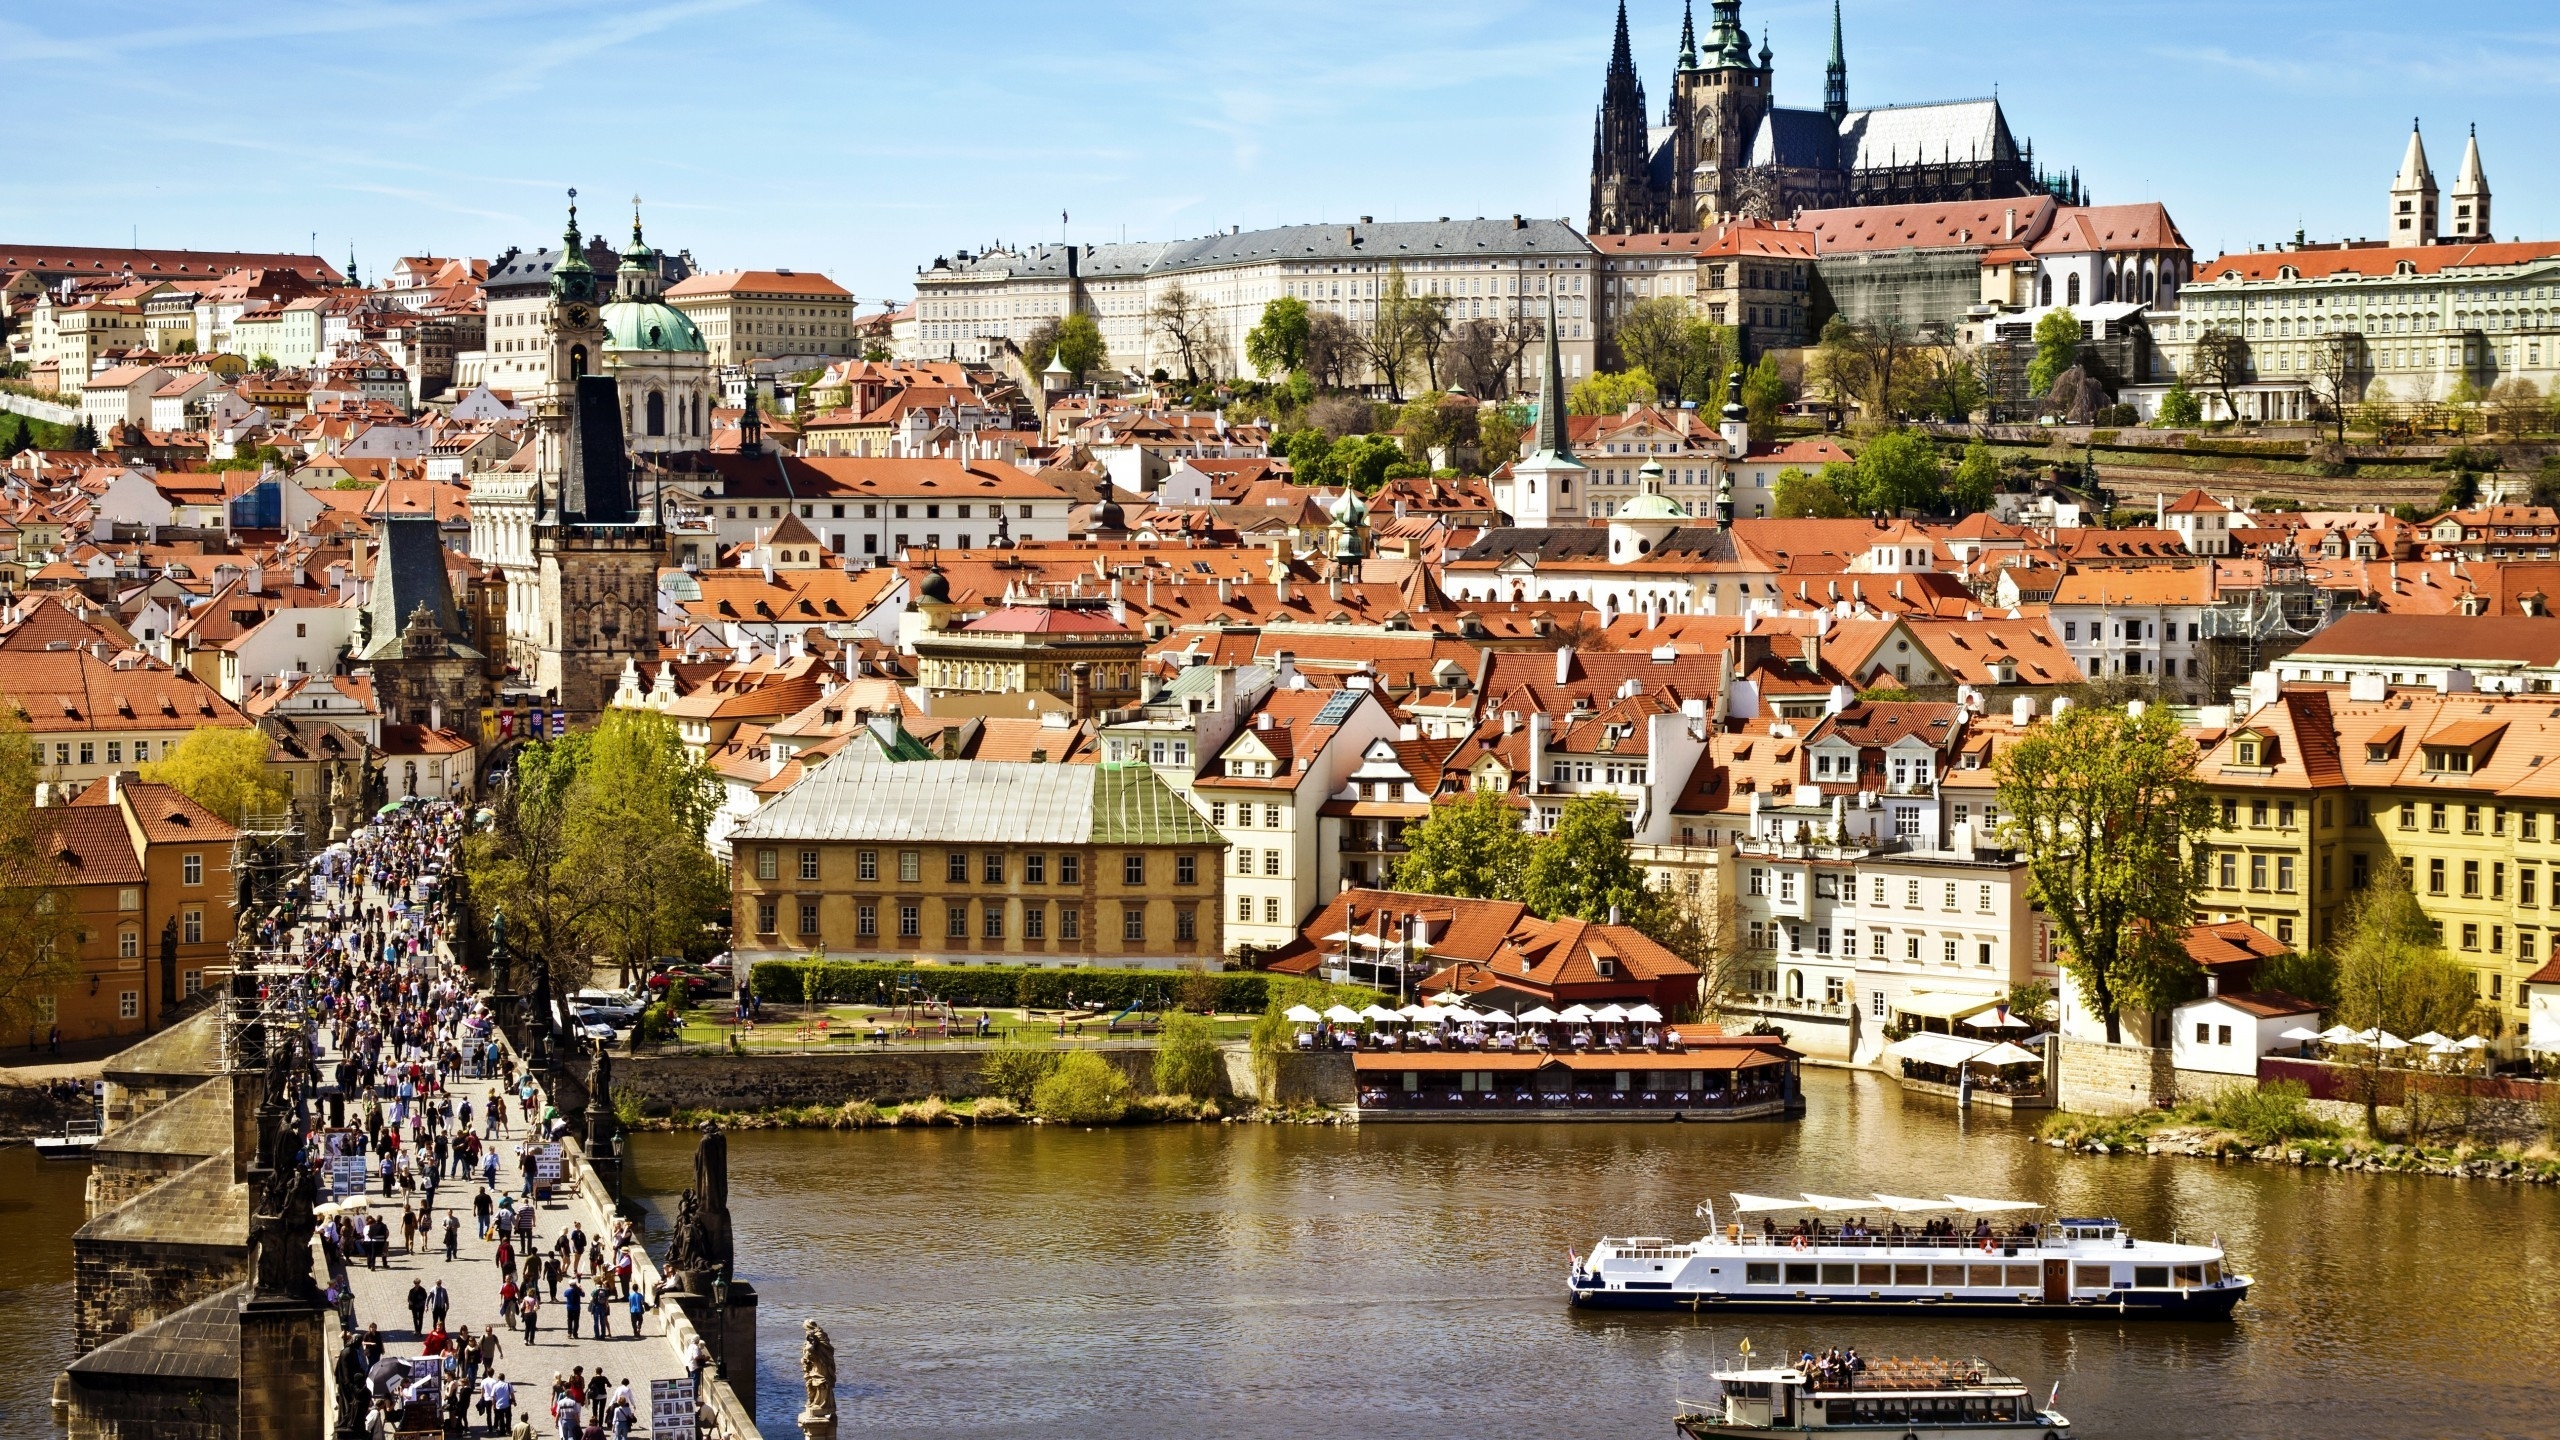 Prague City View for 2560x1440 HDTV resolution